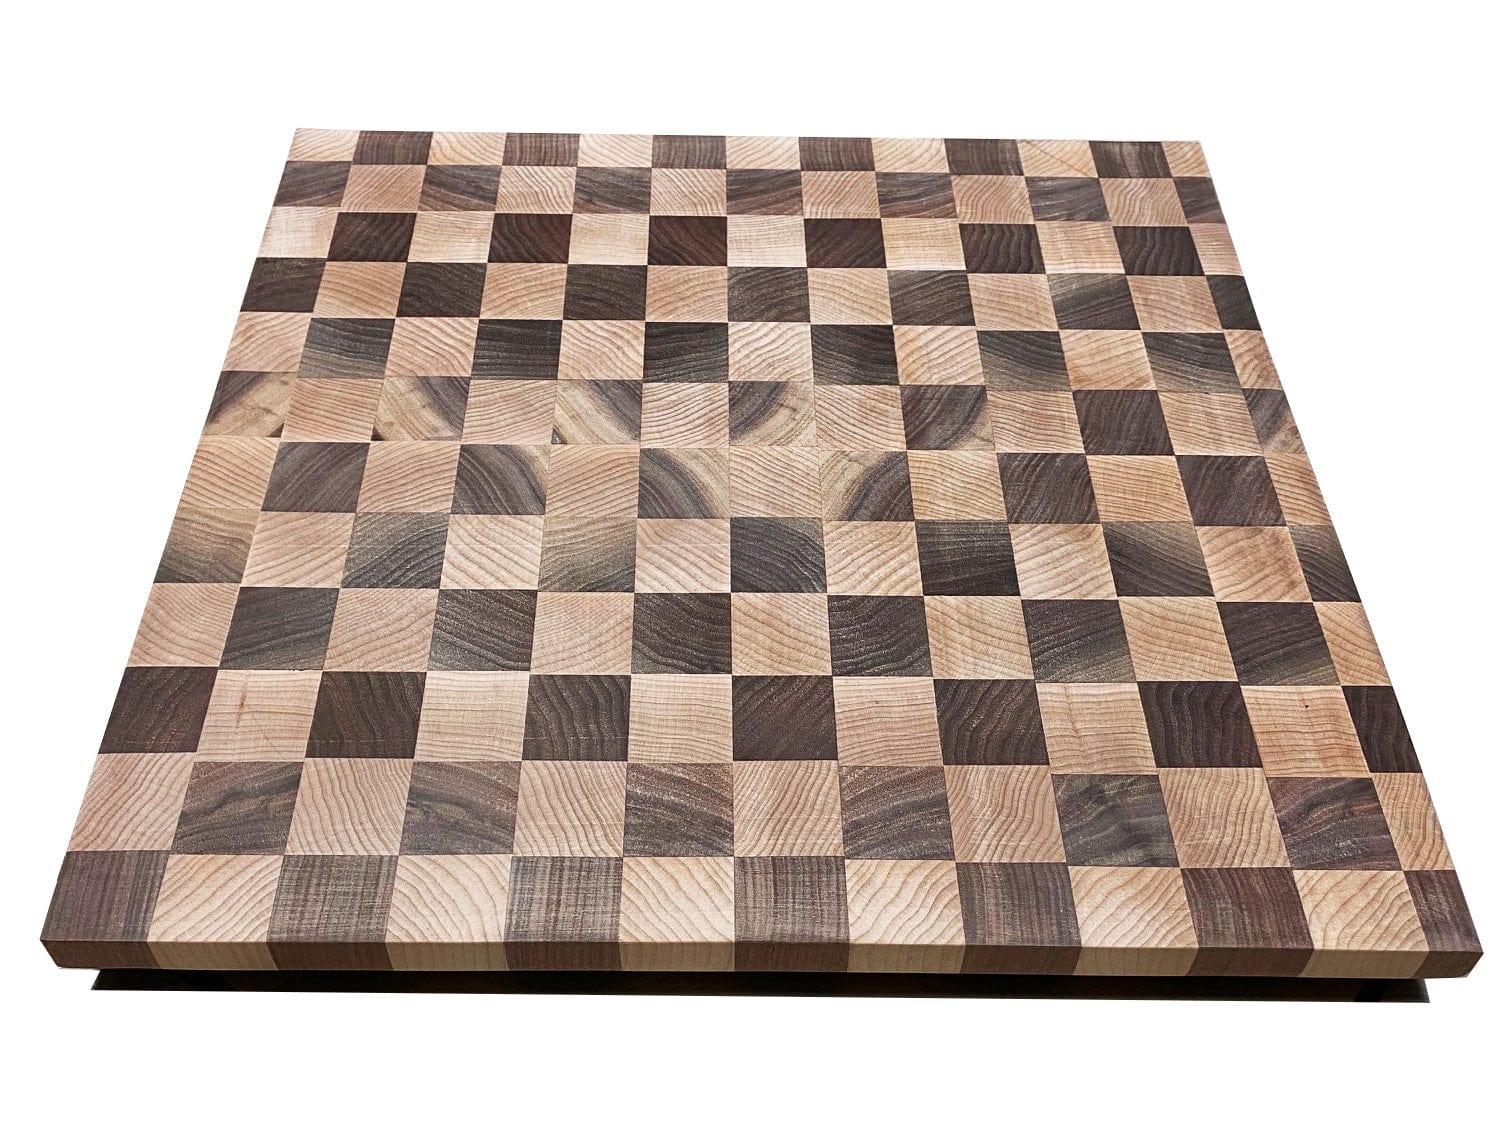 Best Redwood cutting board Maple and Walnut Checker End-grain Cutting Board